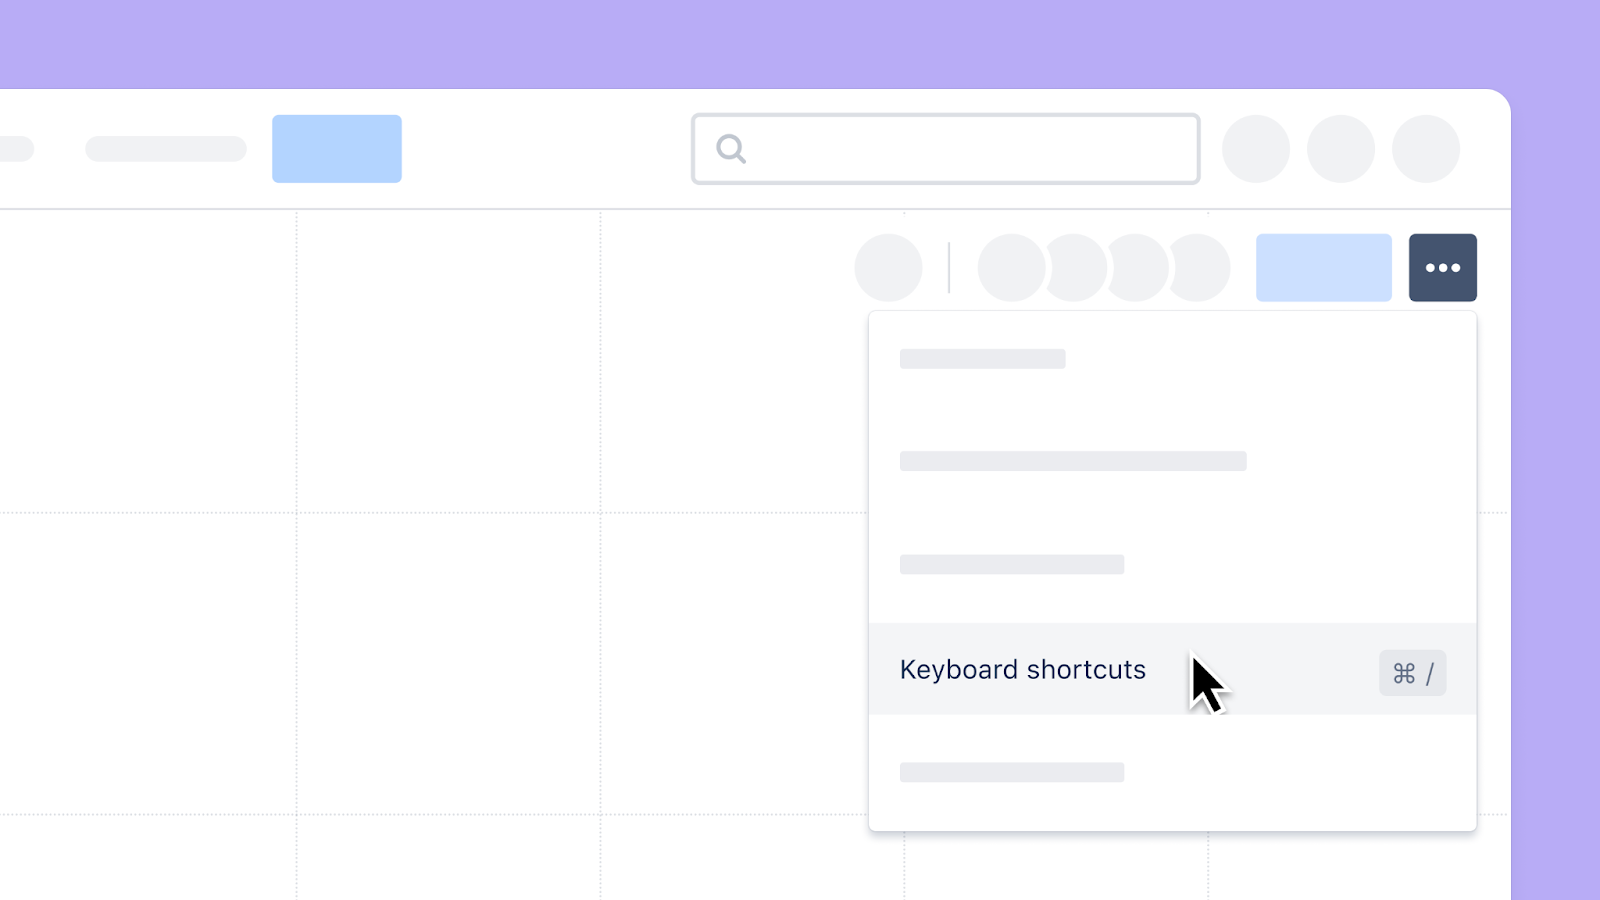 Keyboard shortcuts example.